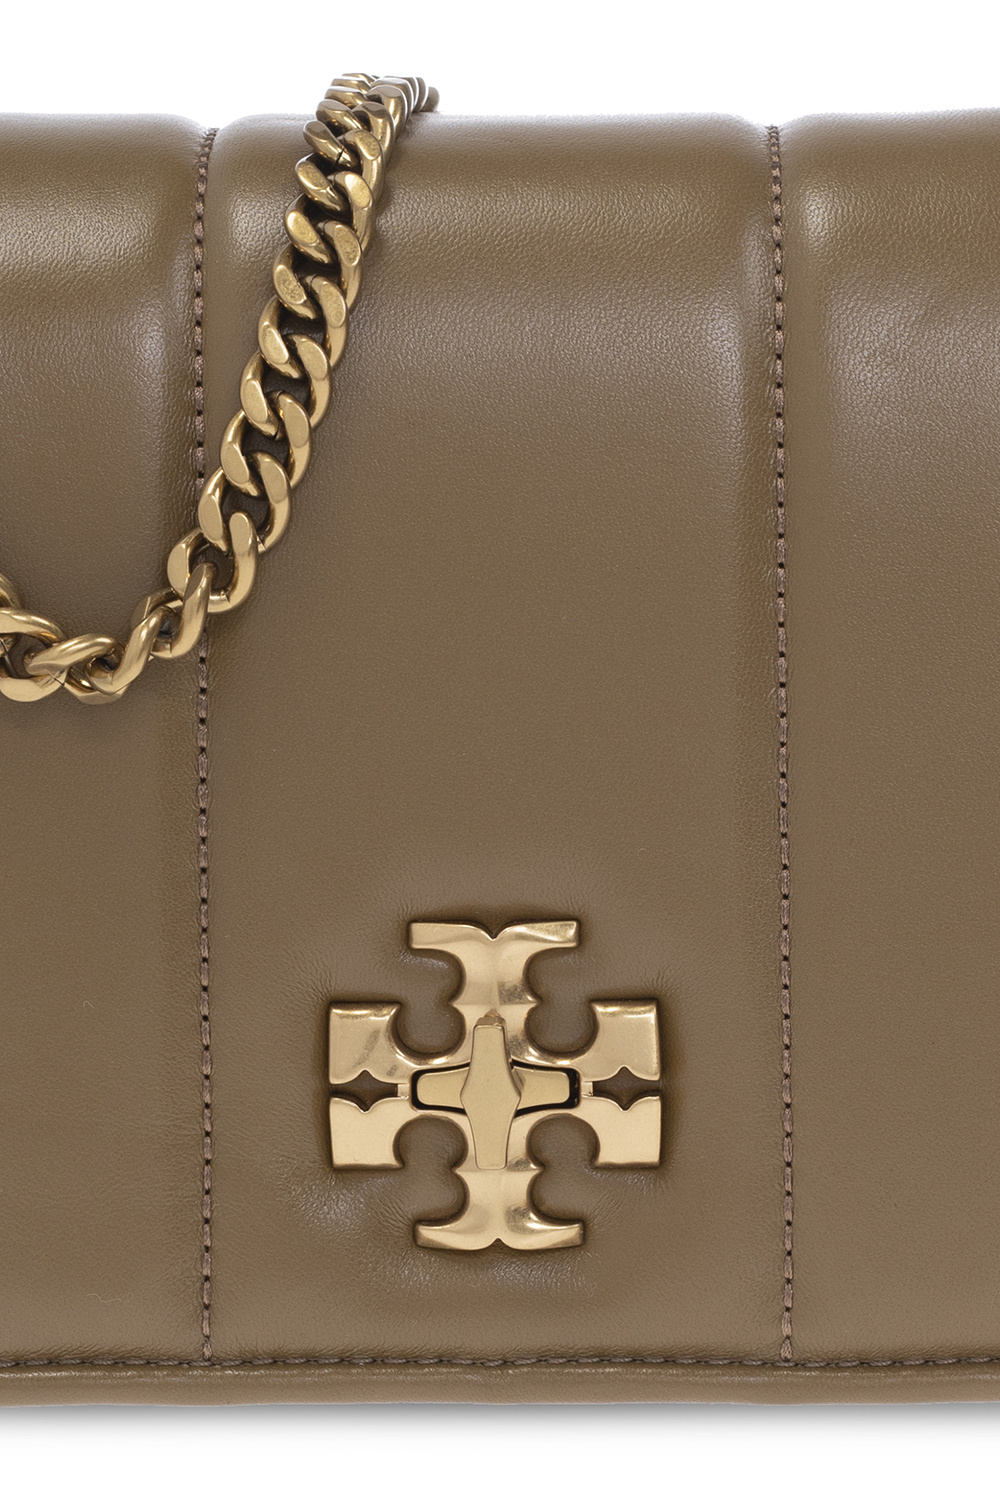 Tory Burch ‘Kira’ leather shoulder bag